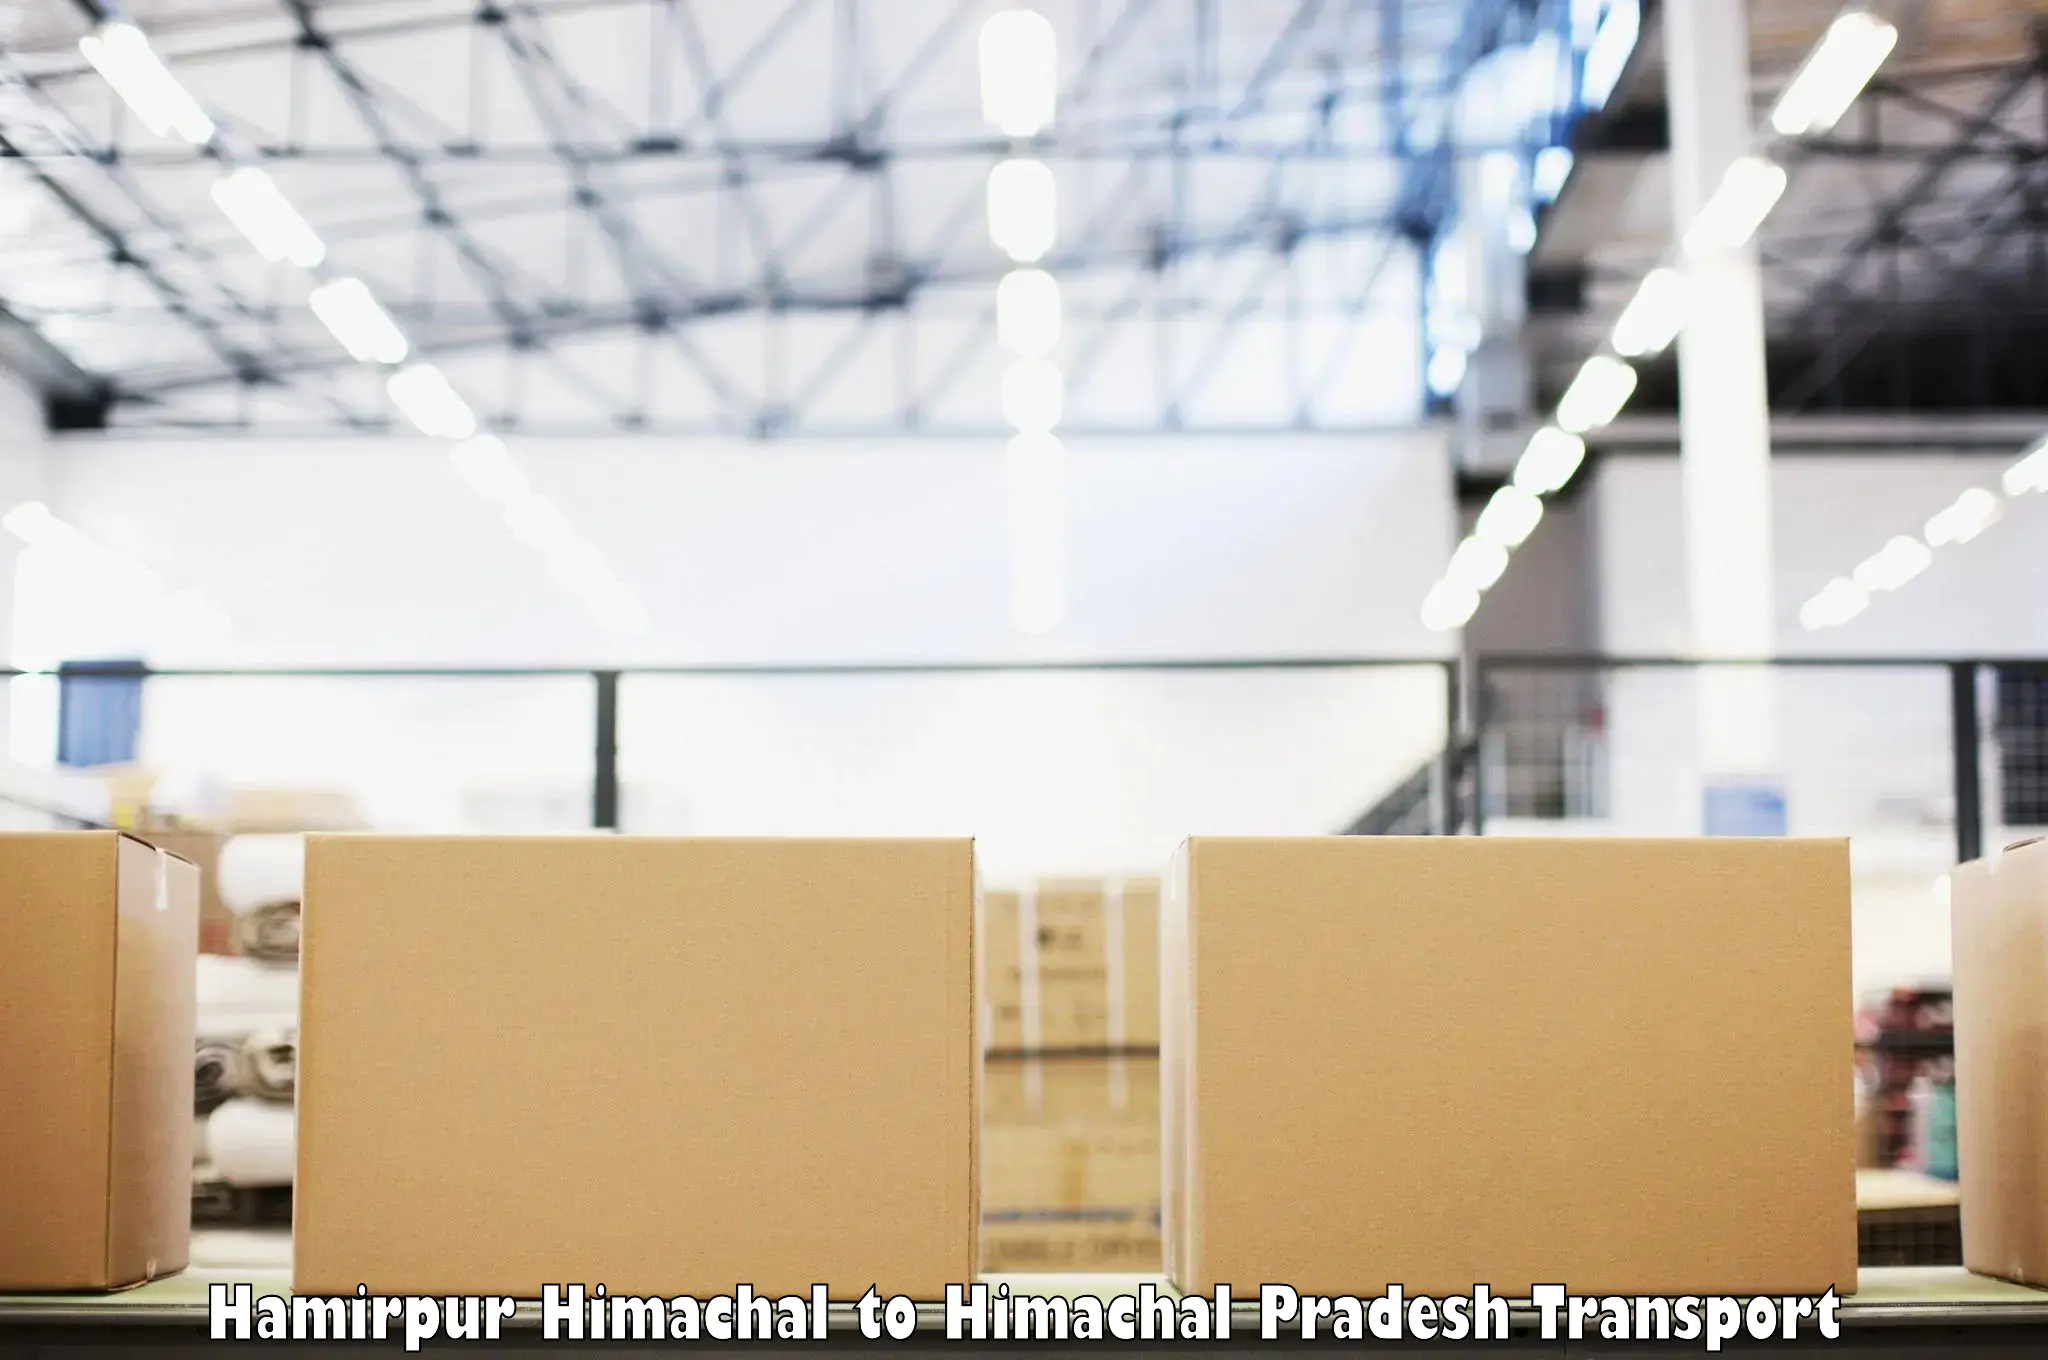 Delivery service Hamirpur Himachal to Himachal Pradesh